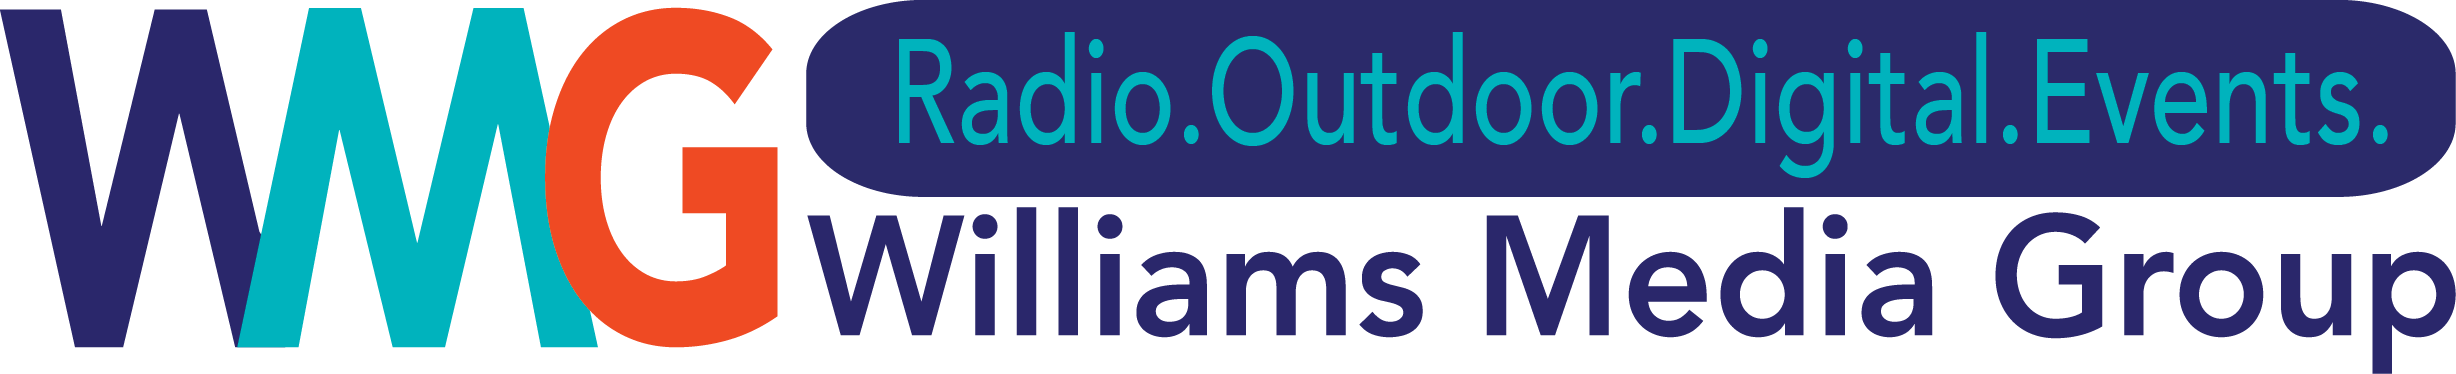 Williams Media Group